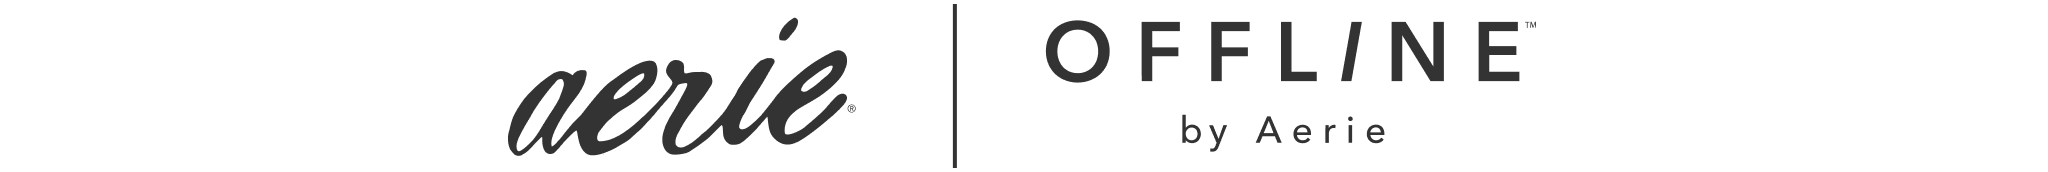 aerie, offline logo